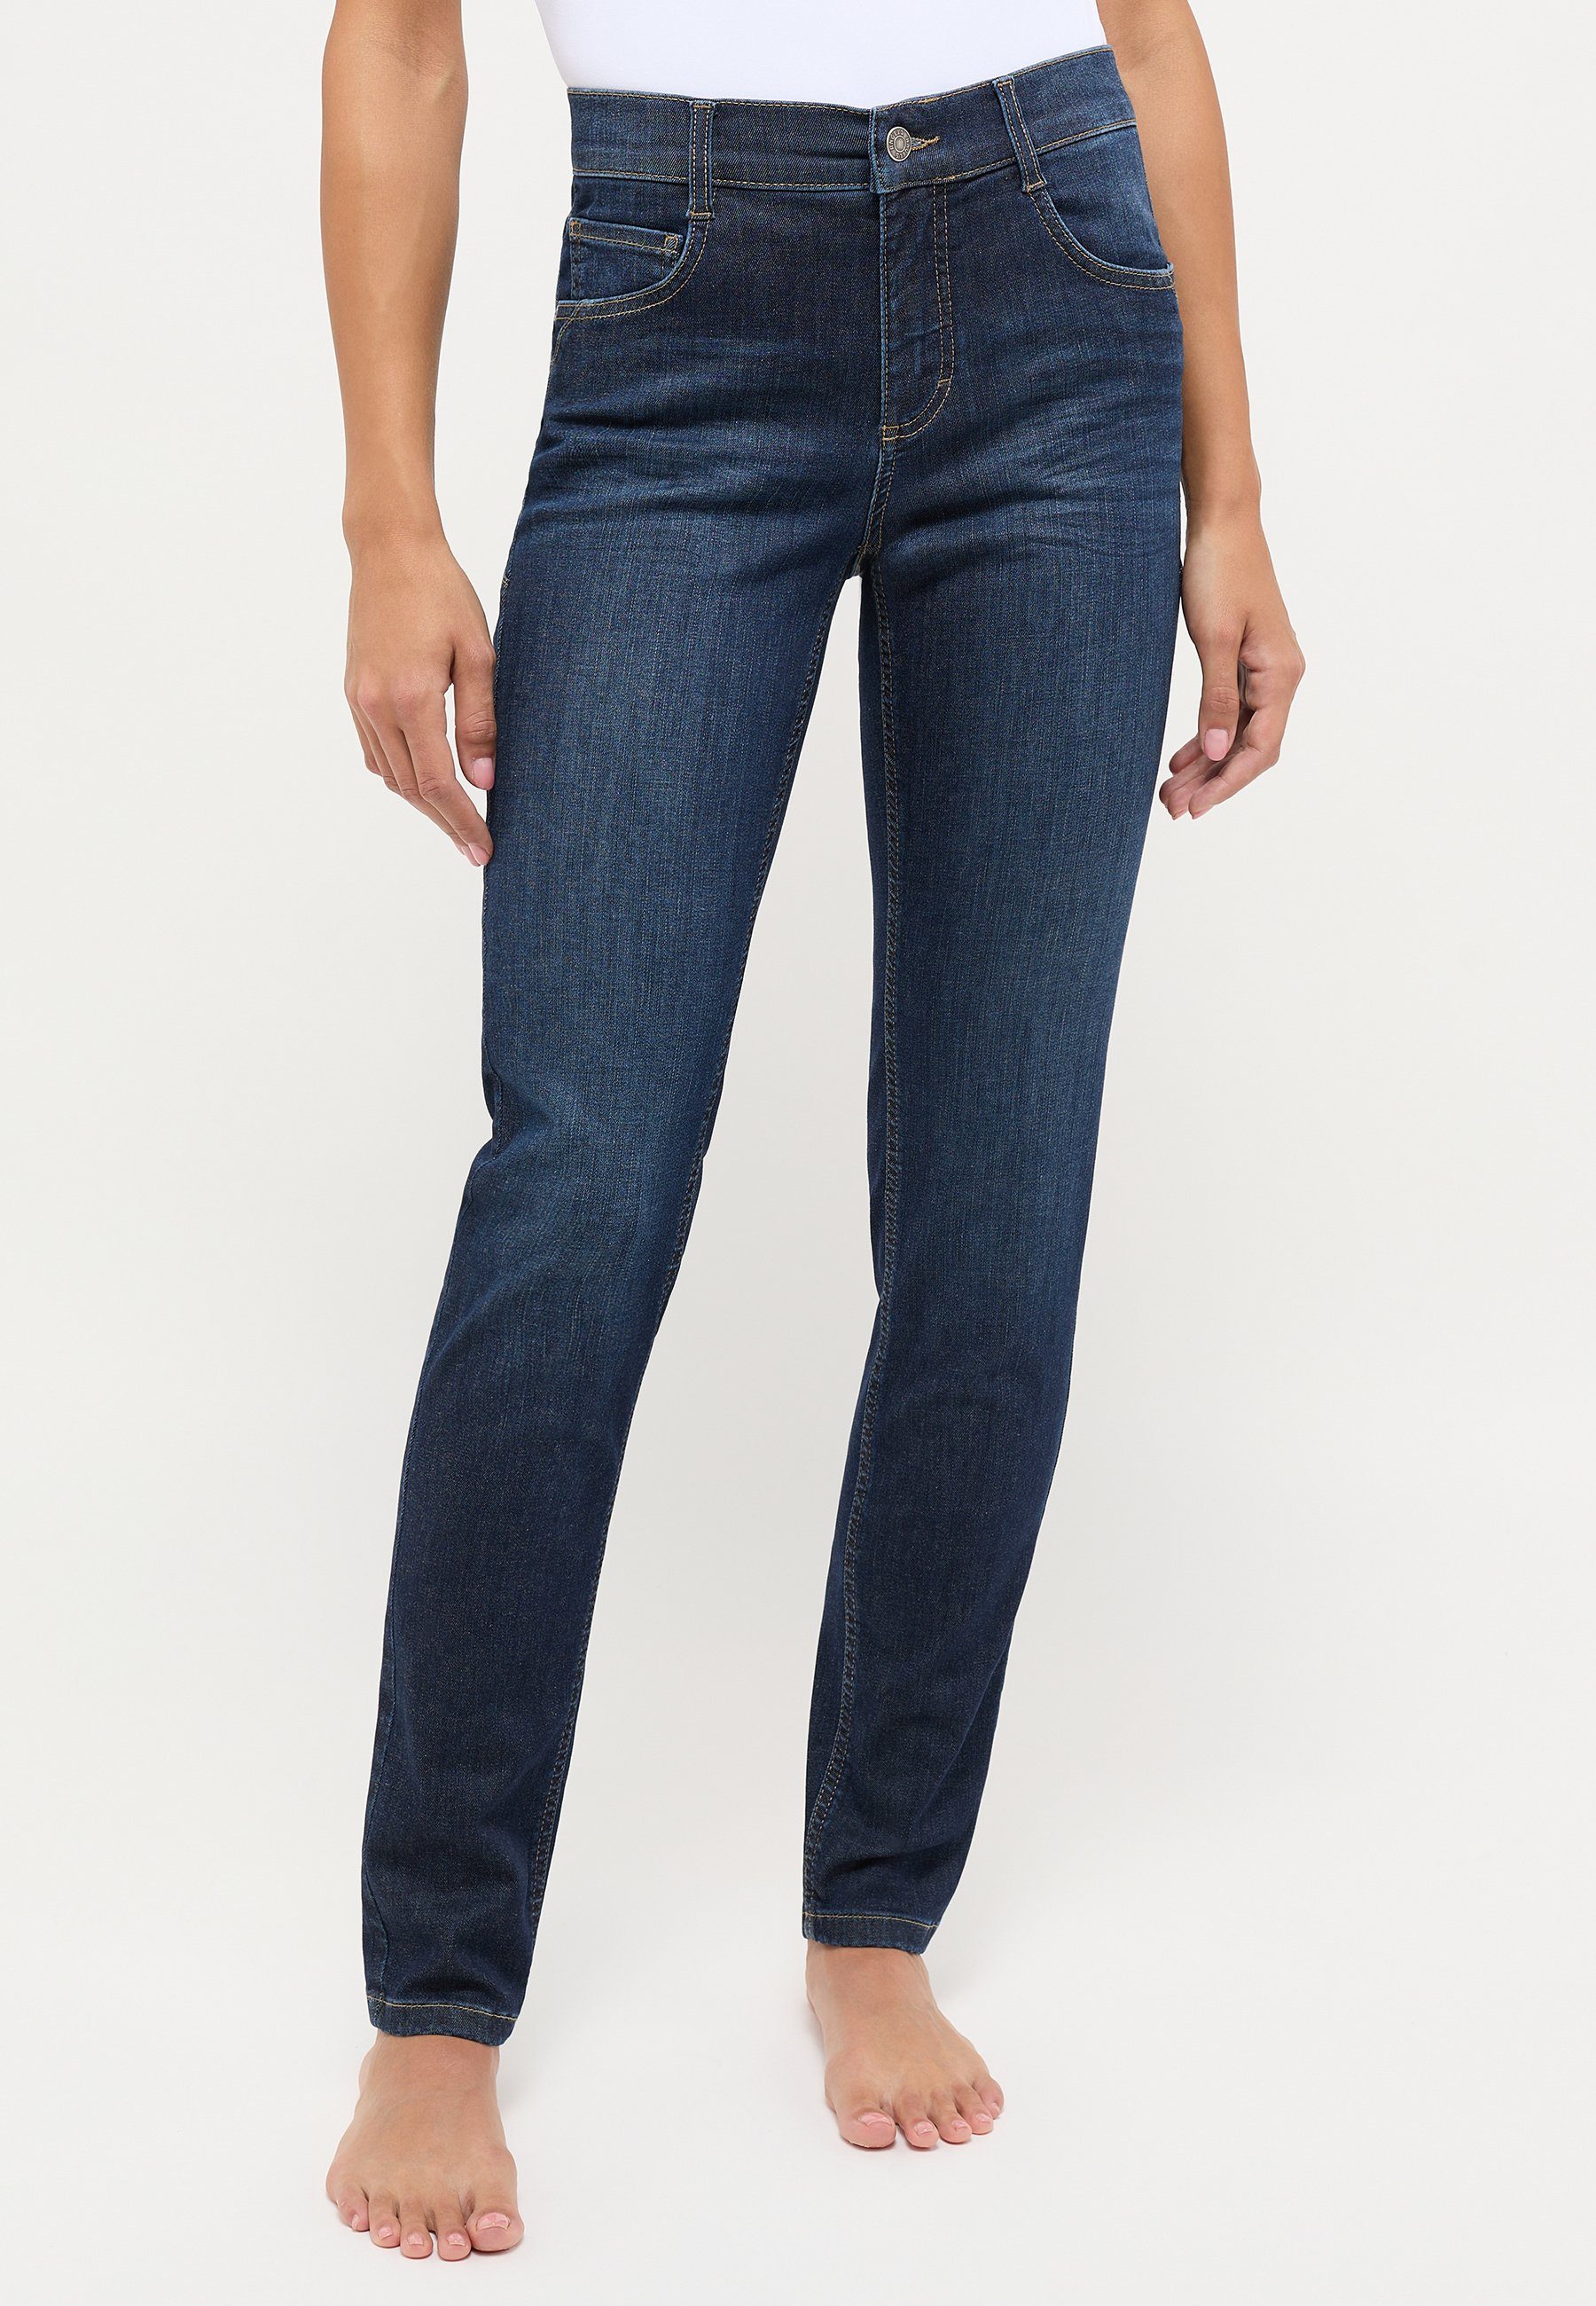 [Super beliebte Artikelnummer! ] ANGELS Slim-fit-Jeans Jeans Skinny Up Label-Applikationen indigo mit Push